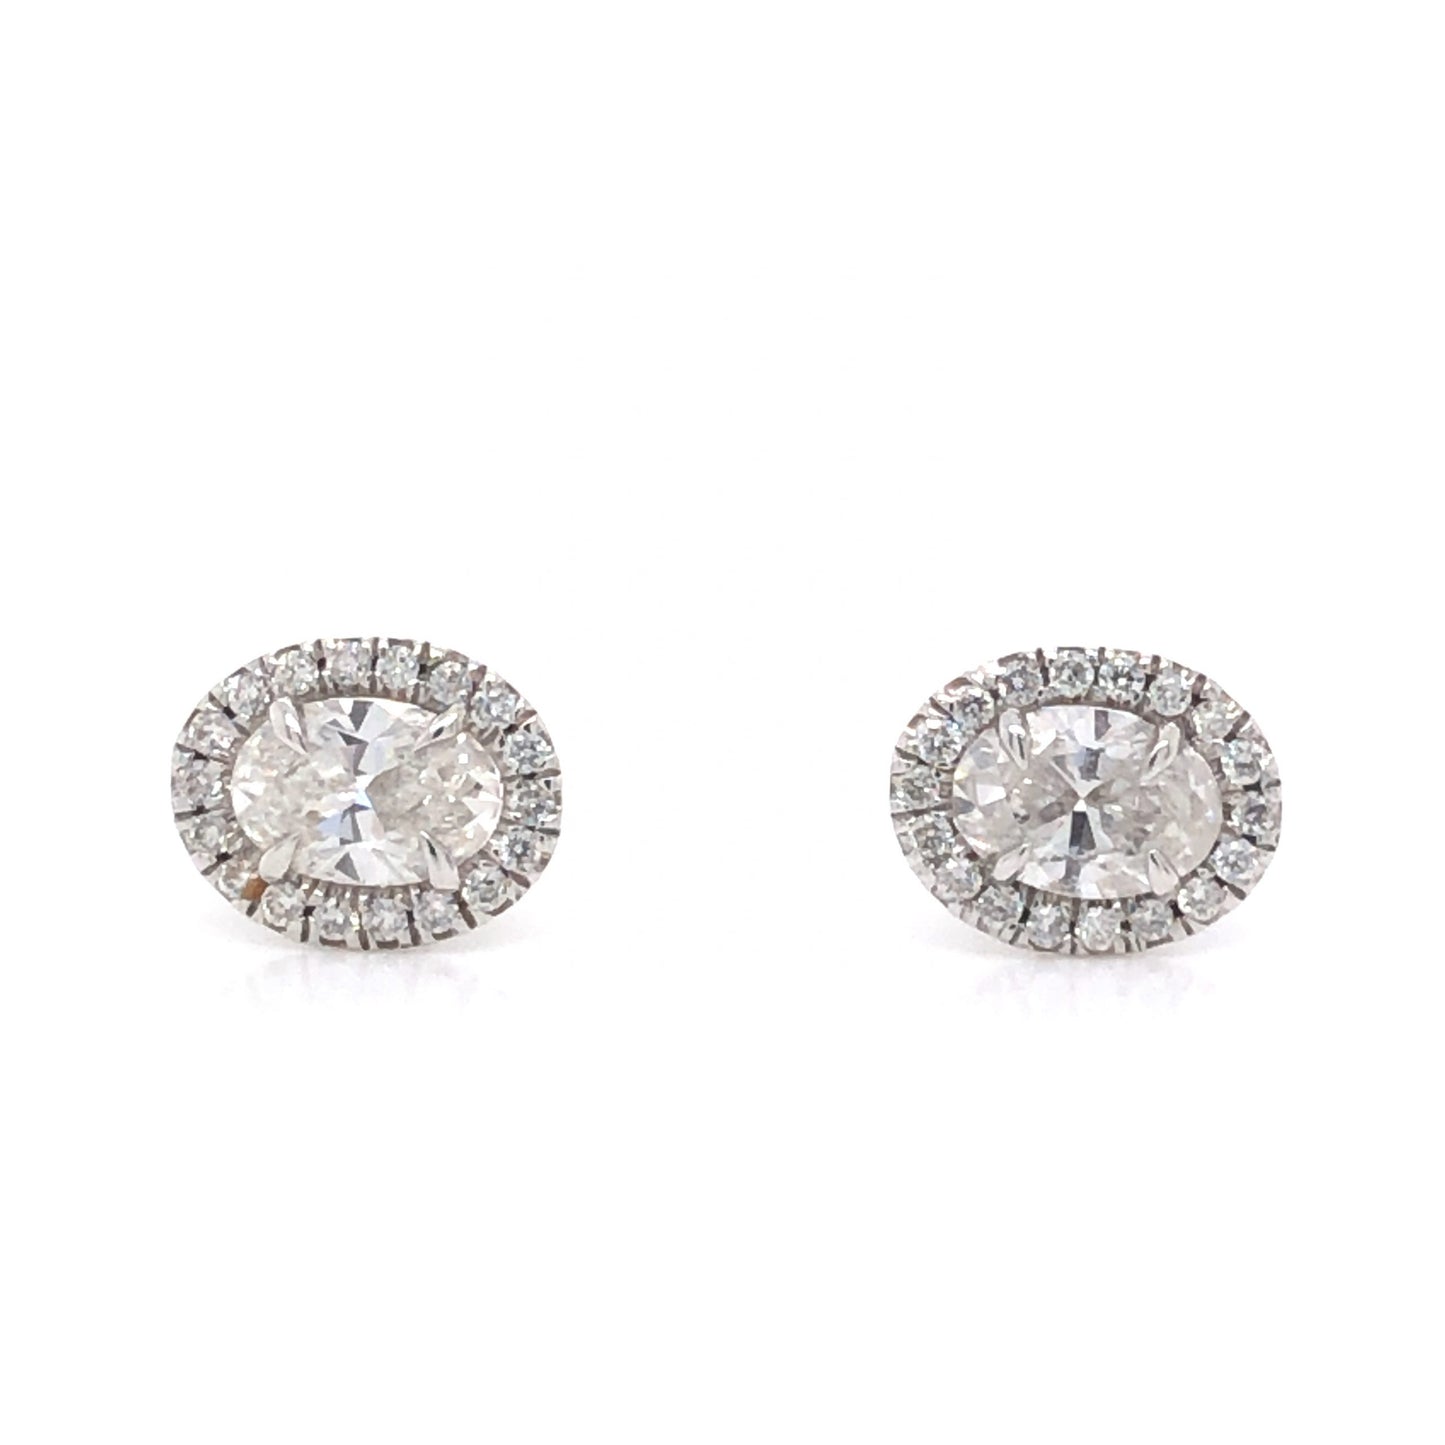 Oval Cut Diamond Halo Earring Studs in 18k White Gold